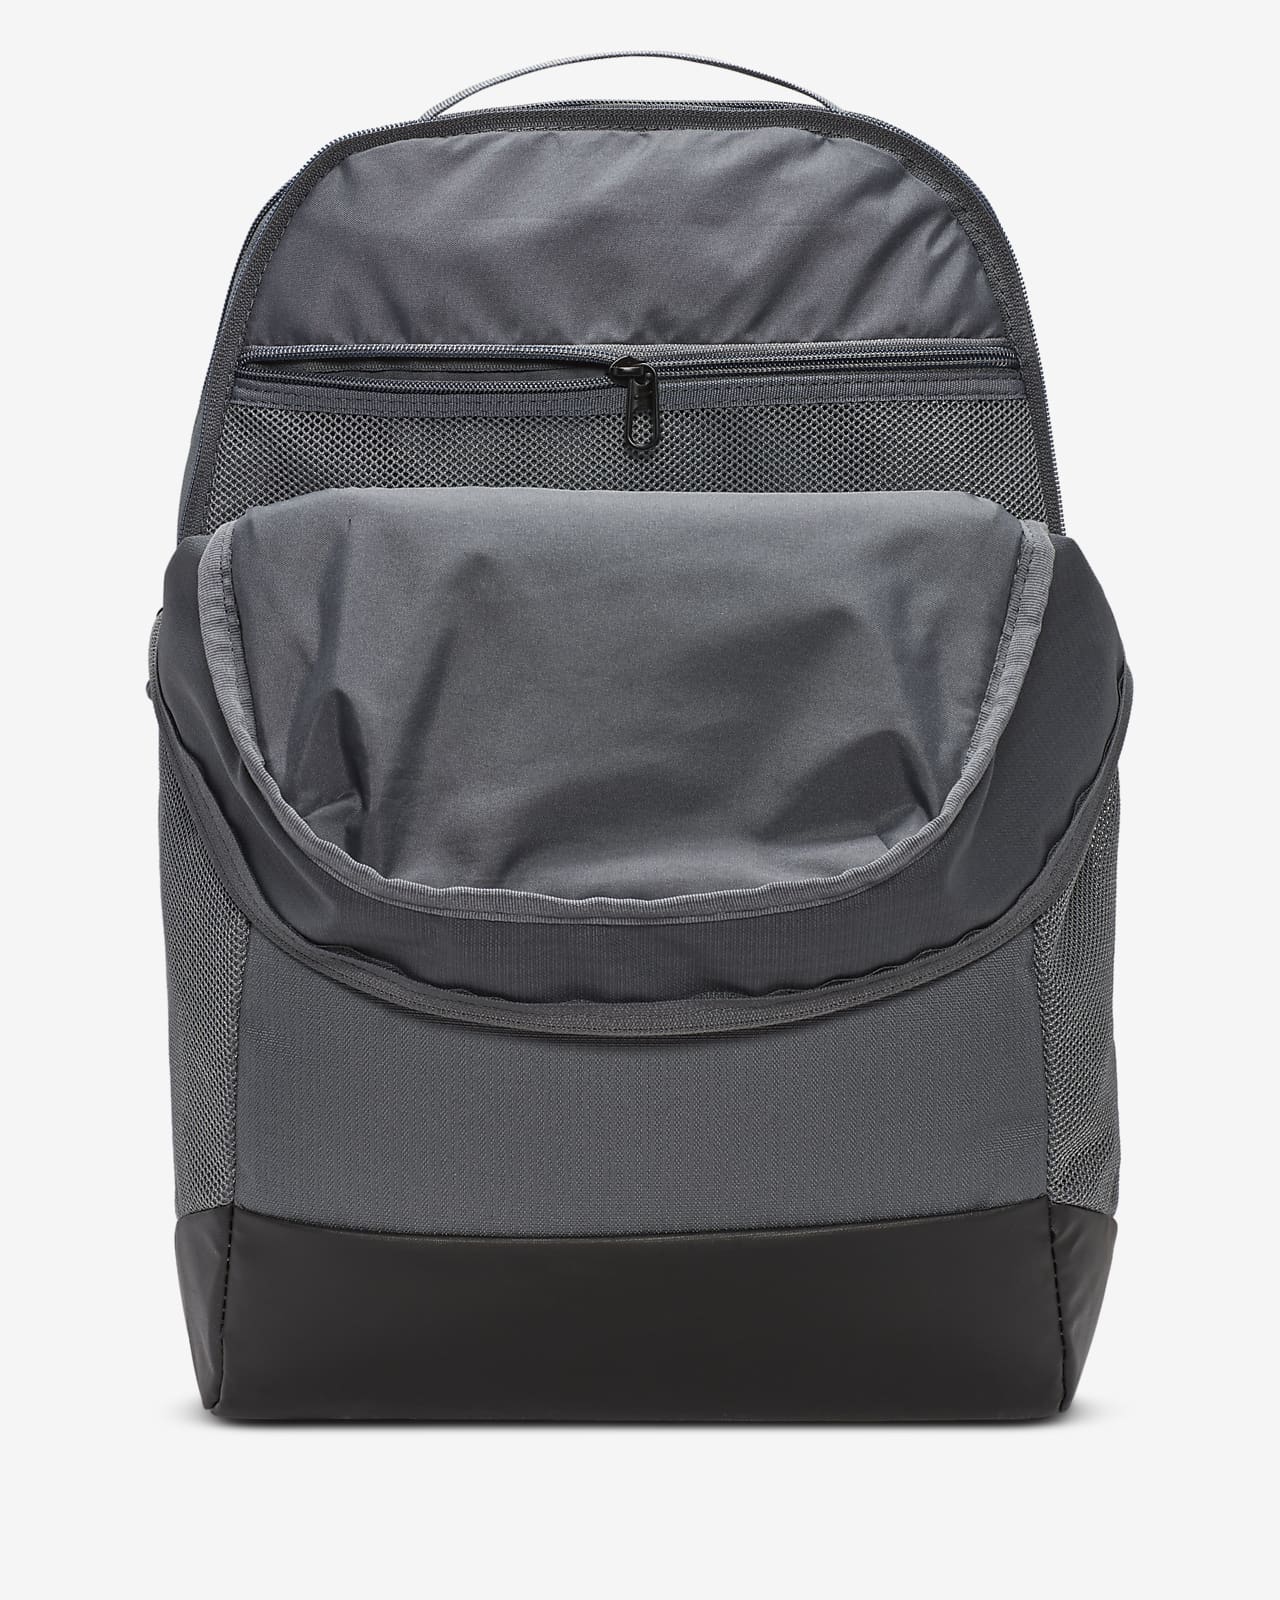 Brasilia 9.5 Training Backpack (Medium, 24L) from Nike